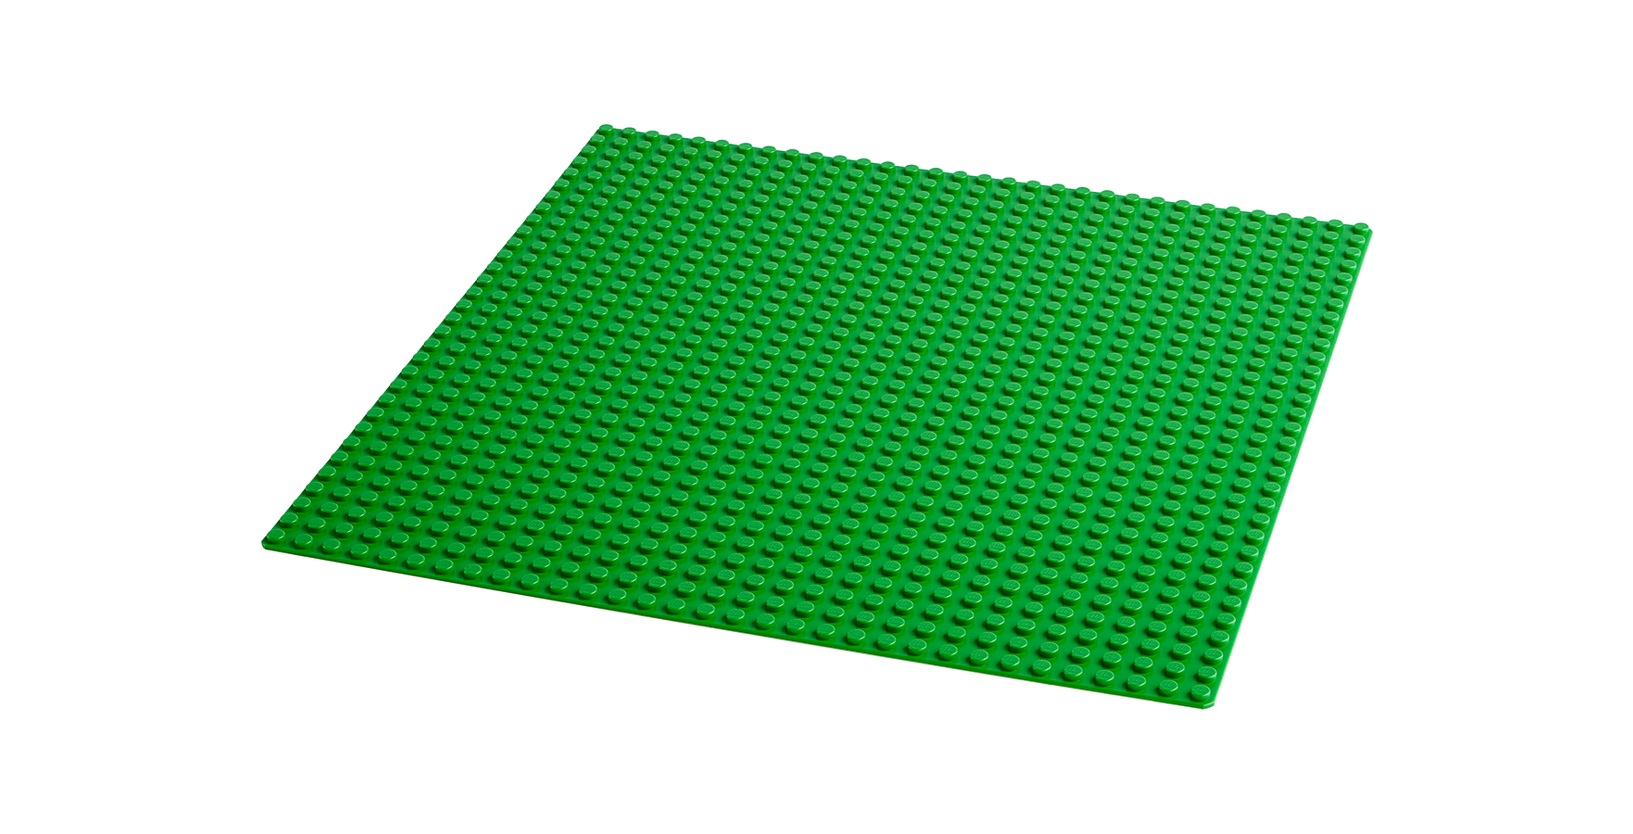 Lego Lego 11023 Classic - La plaque de construction verte